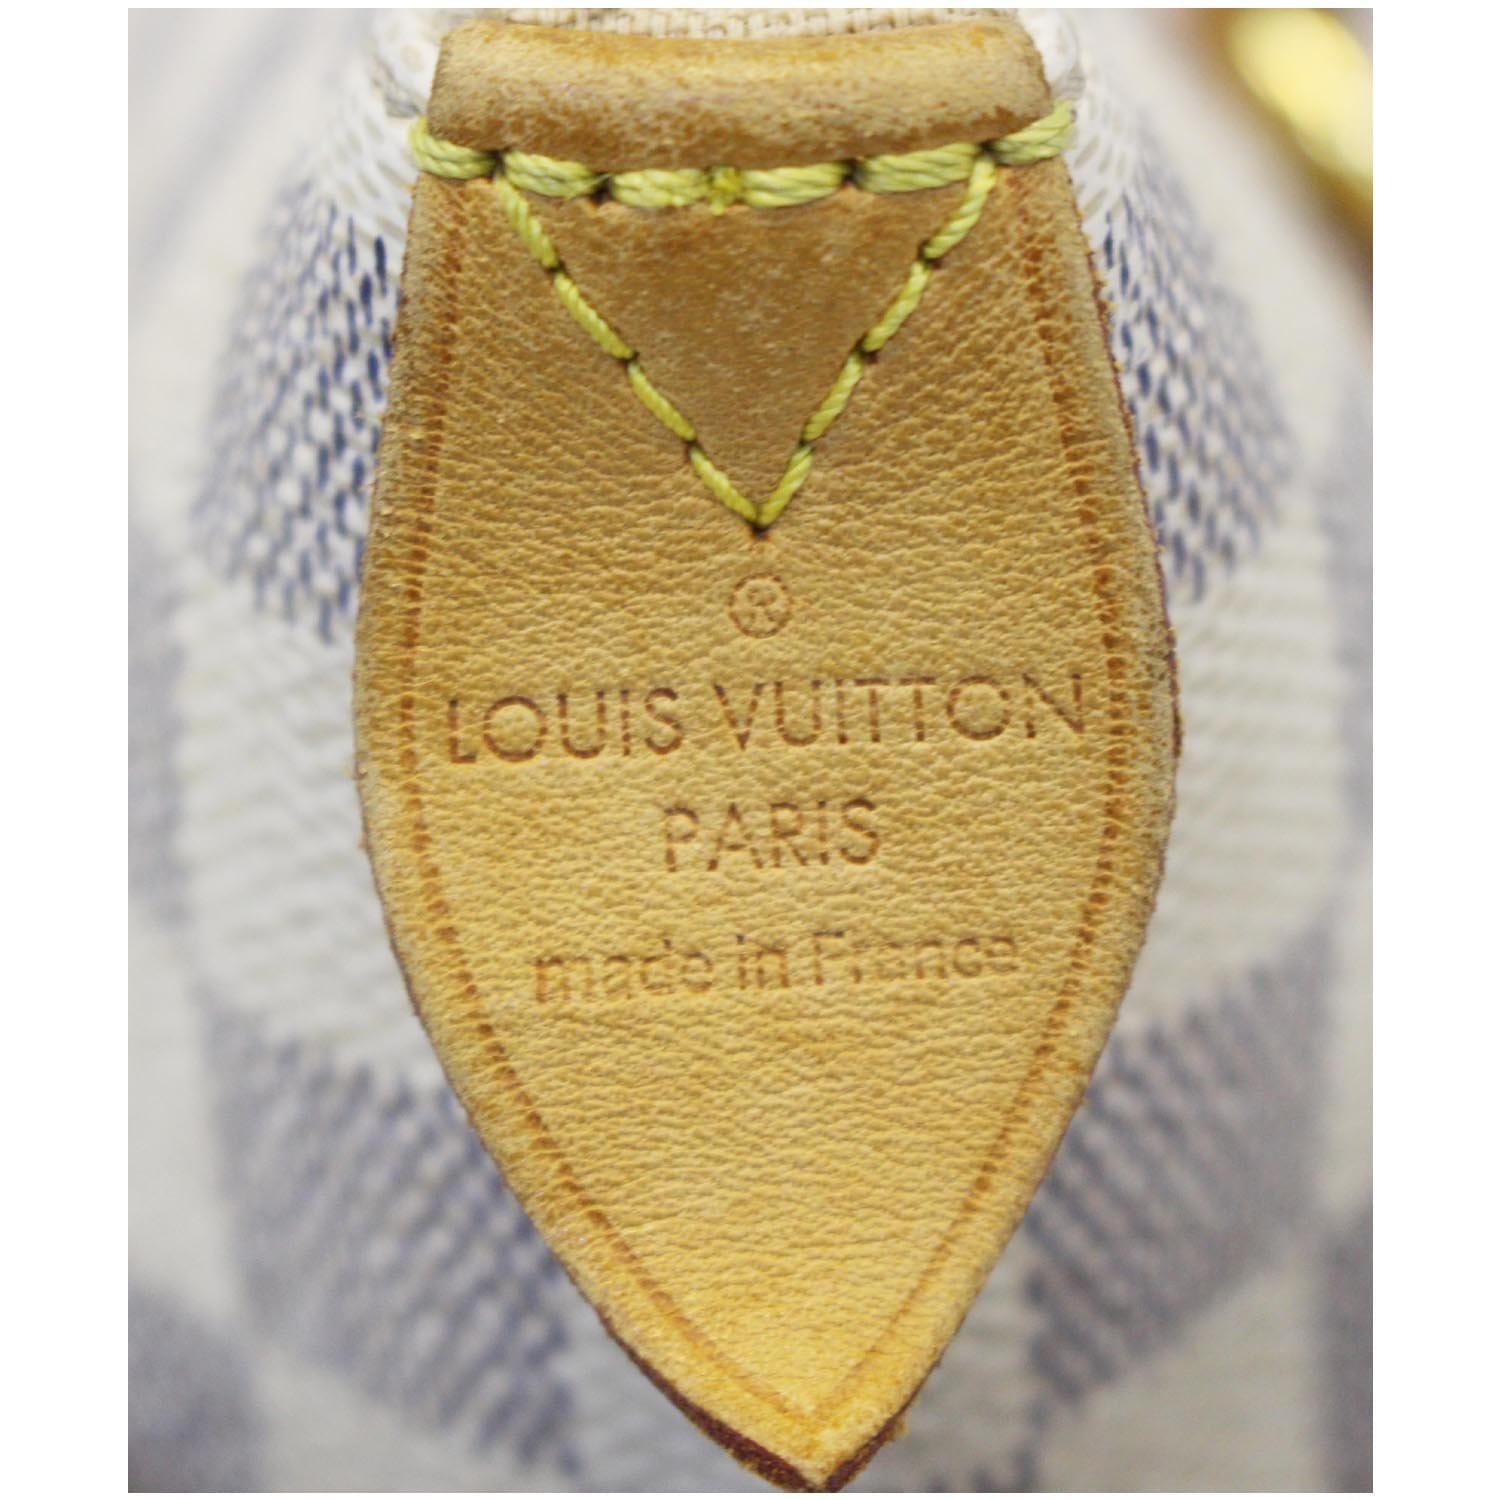 Louis Vuitton Totally PM Damier Azur Bag - Organic Olivia